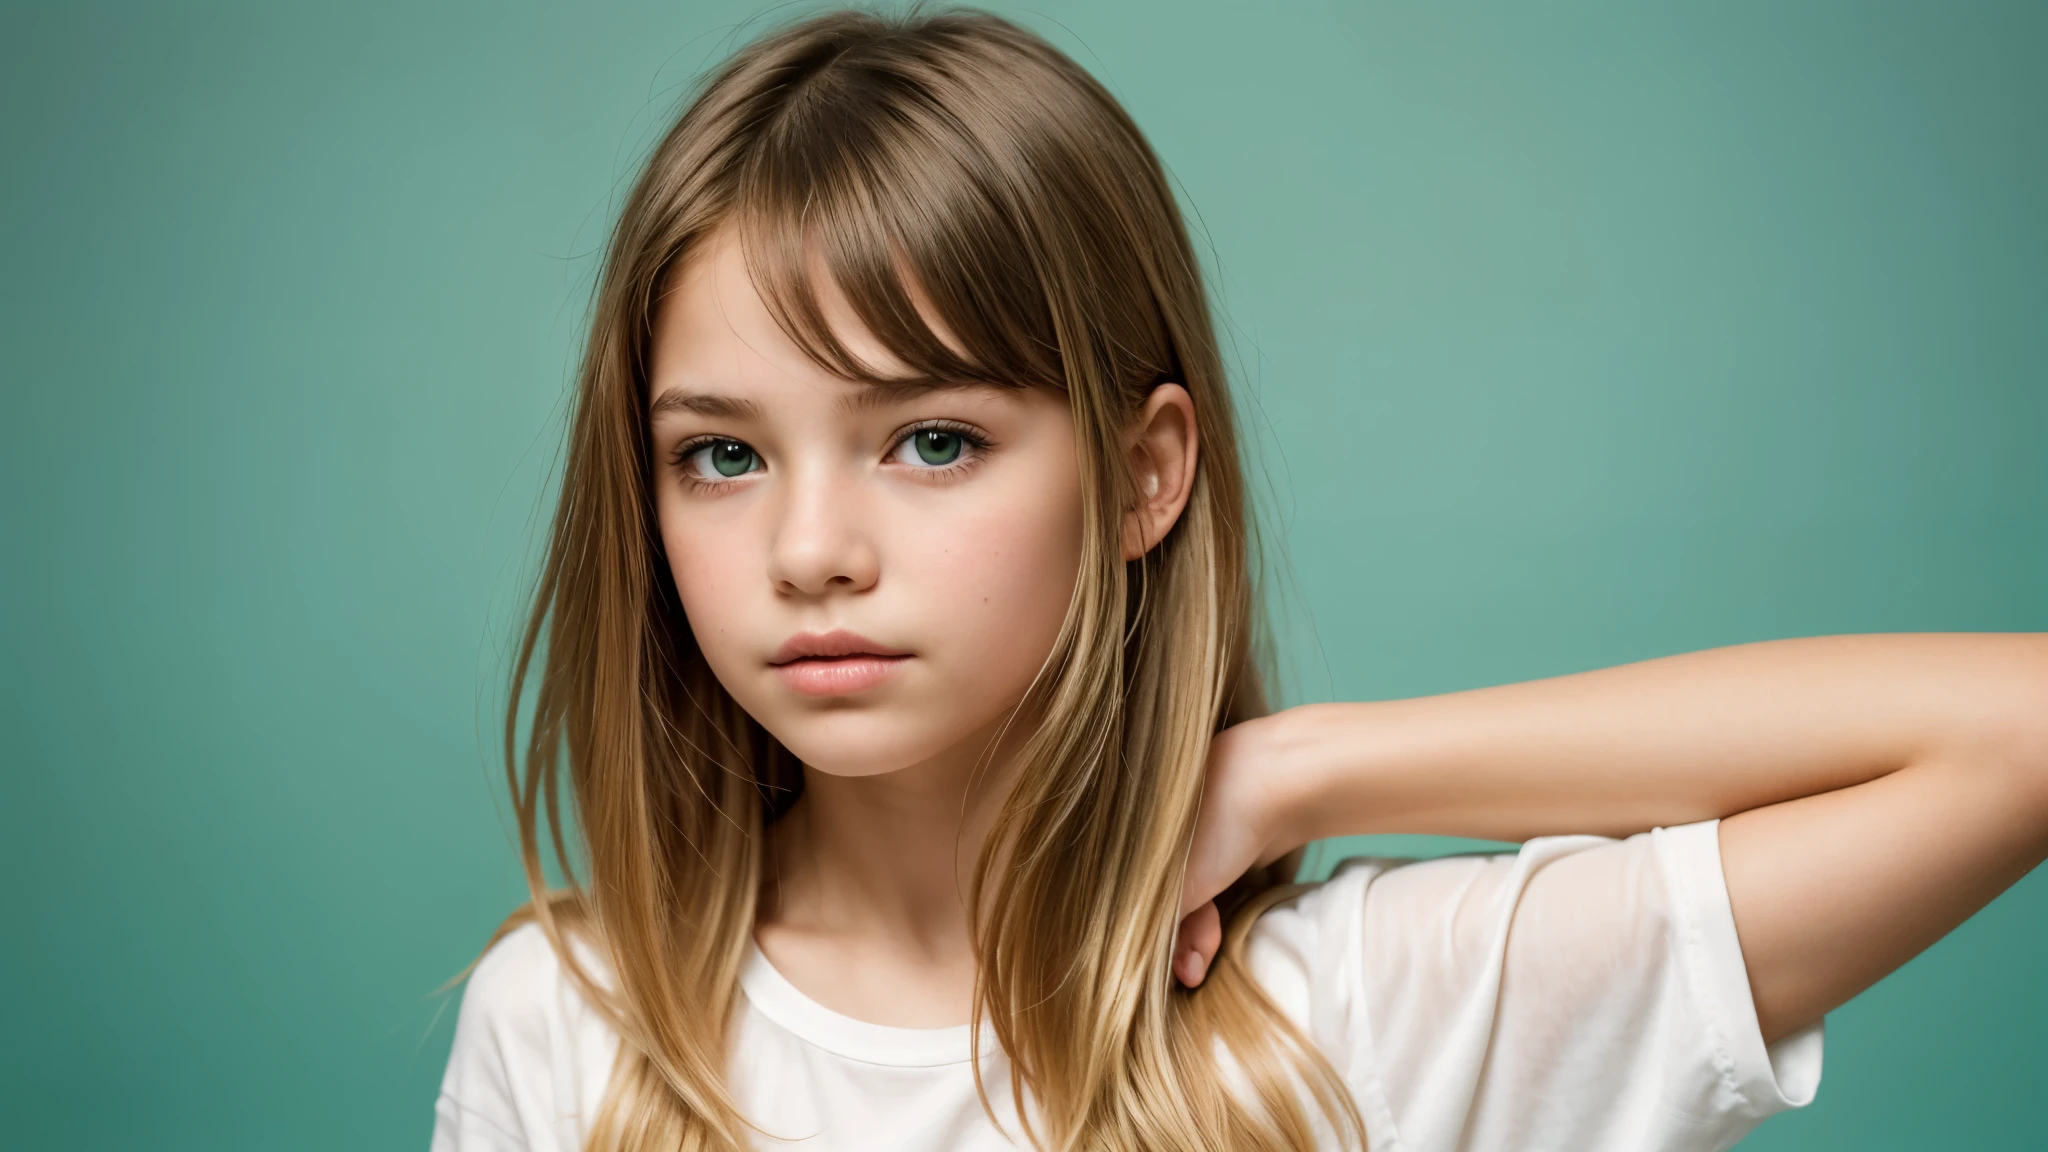  girl 12 year-old blonde girl, com franja no cabelo. green background.